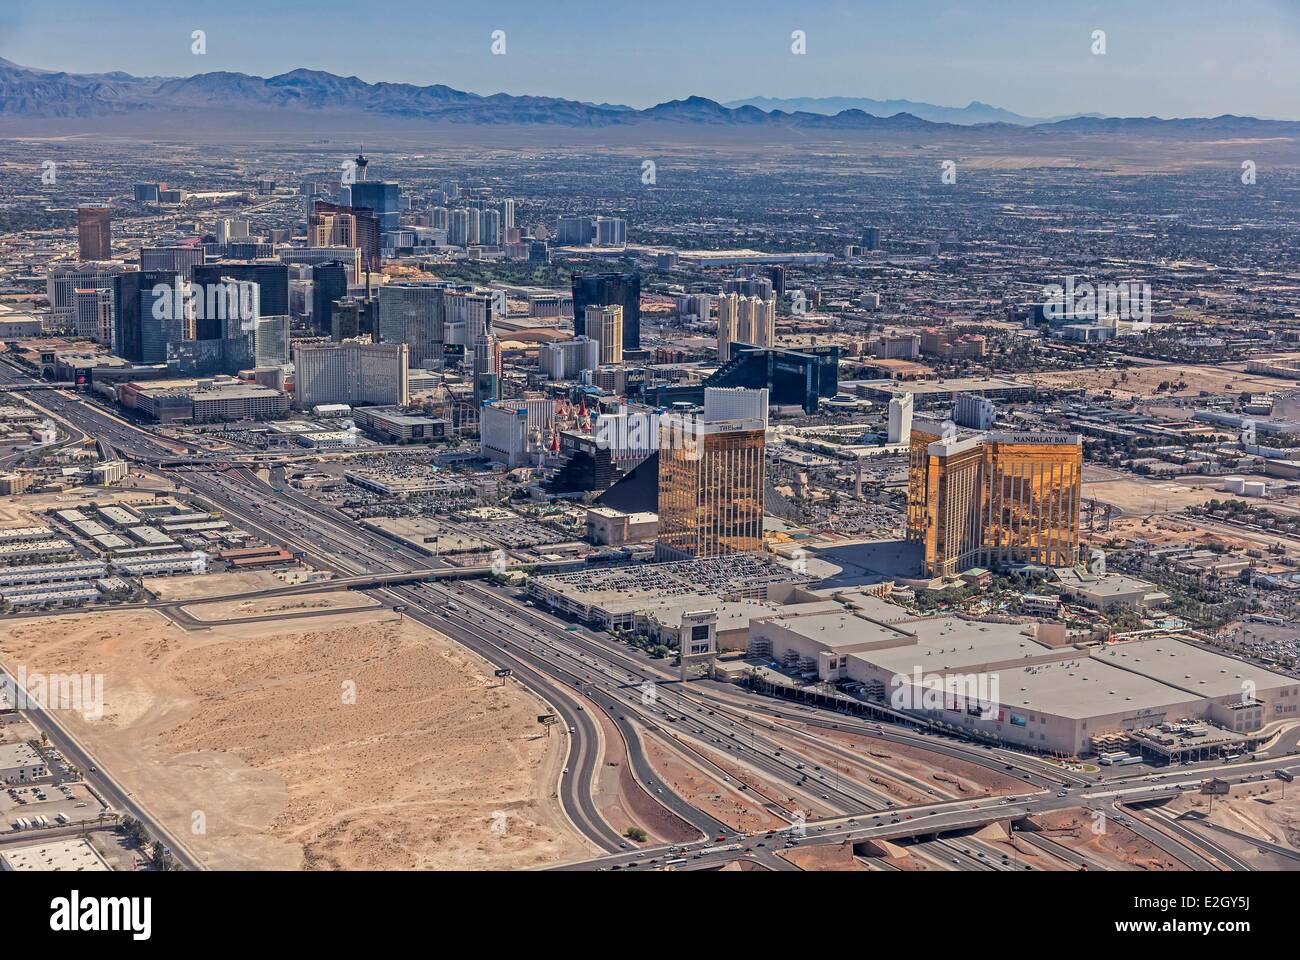 United States Nevada city of Las Vegas with Las Vegas Strip (aerial view) Stock Photo